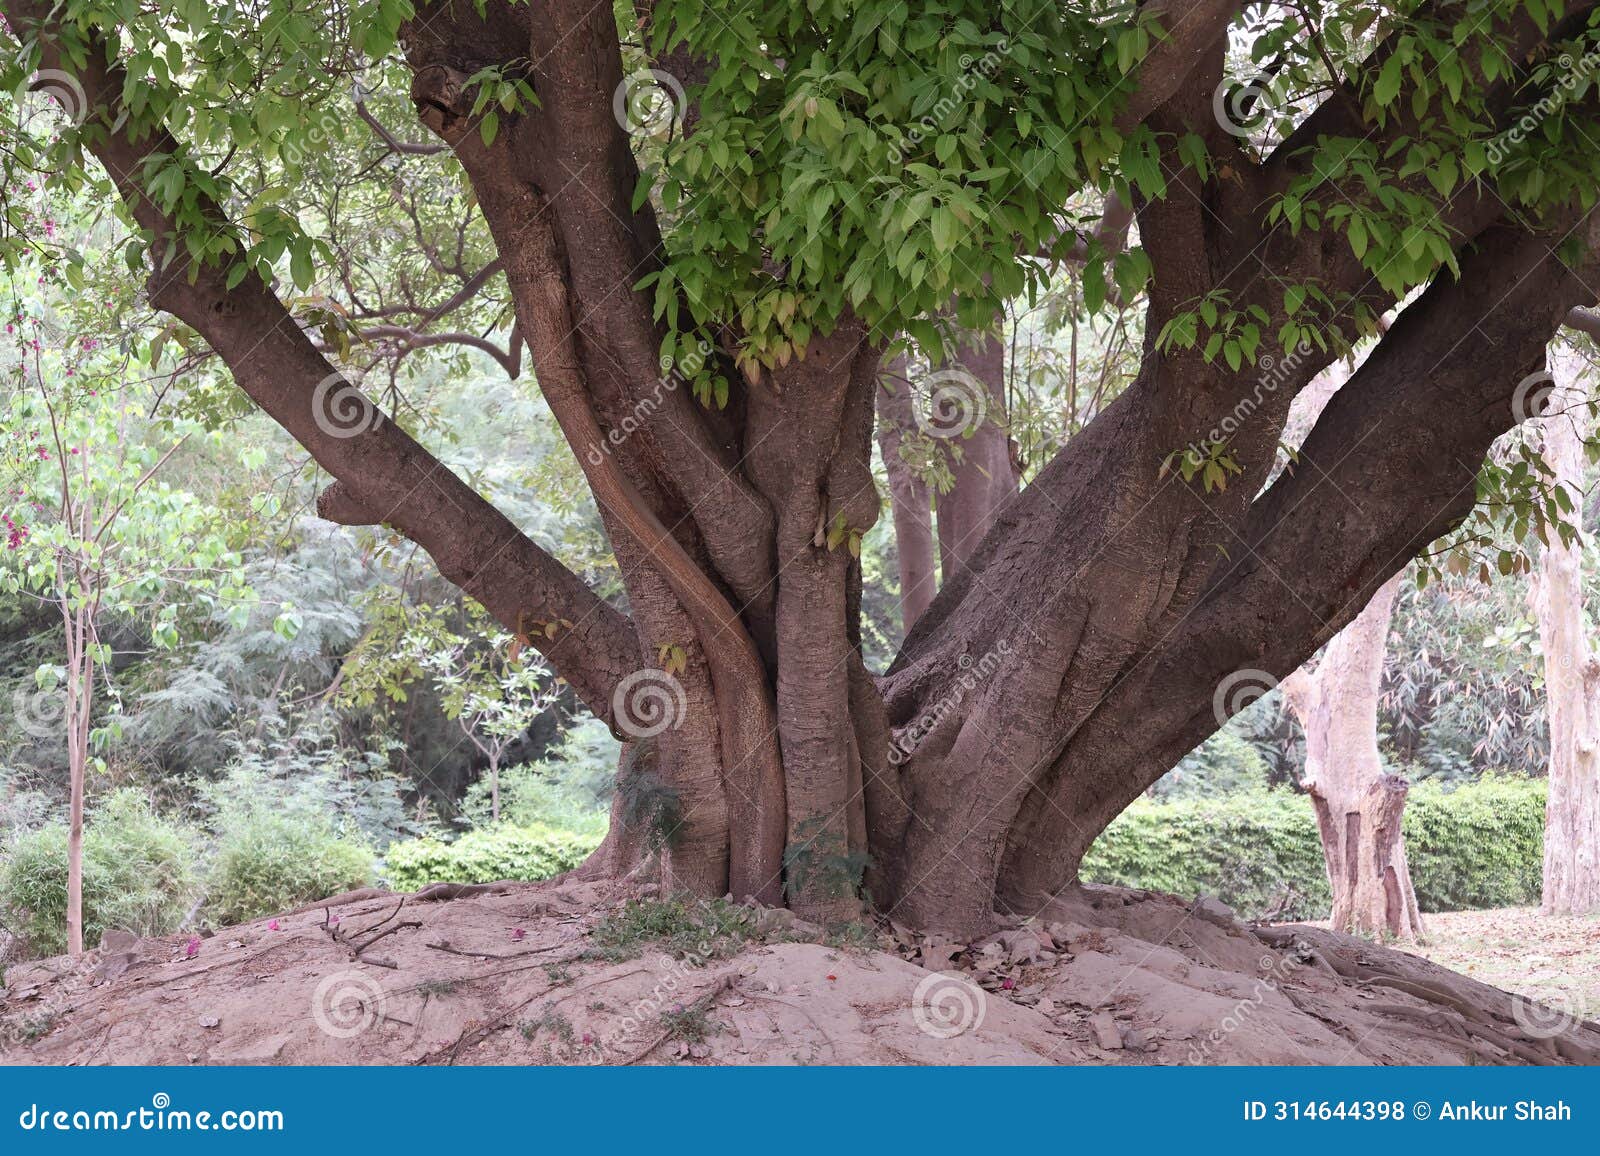 random tree picture at delhi zoological park india